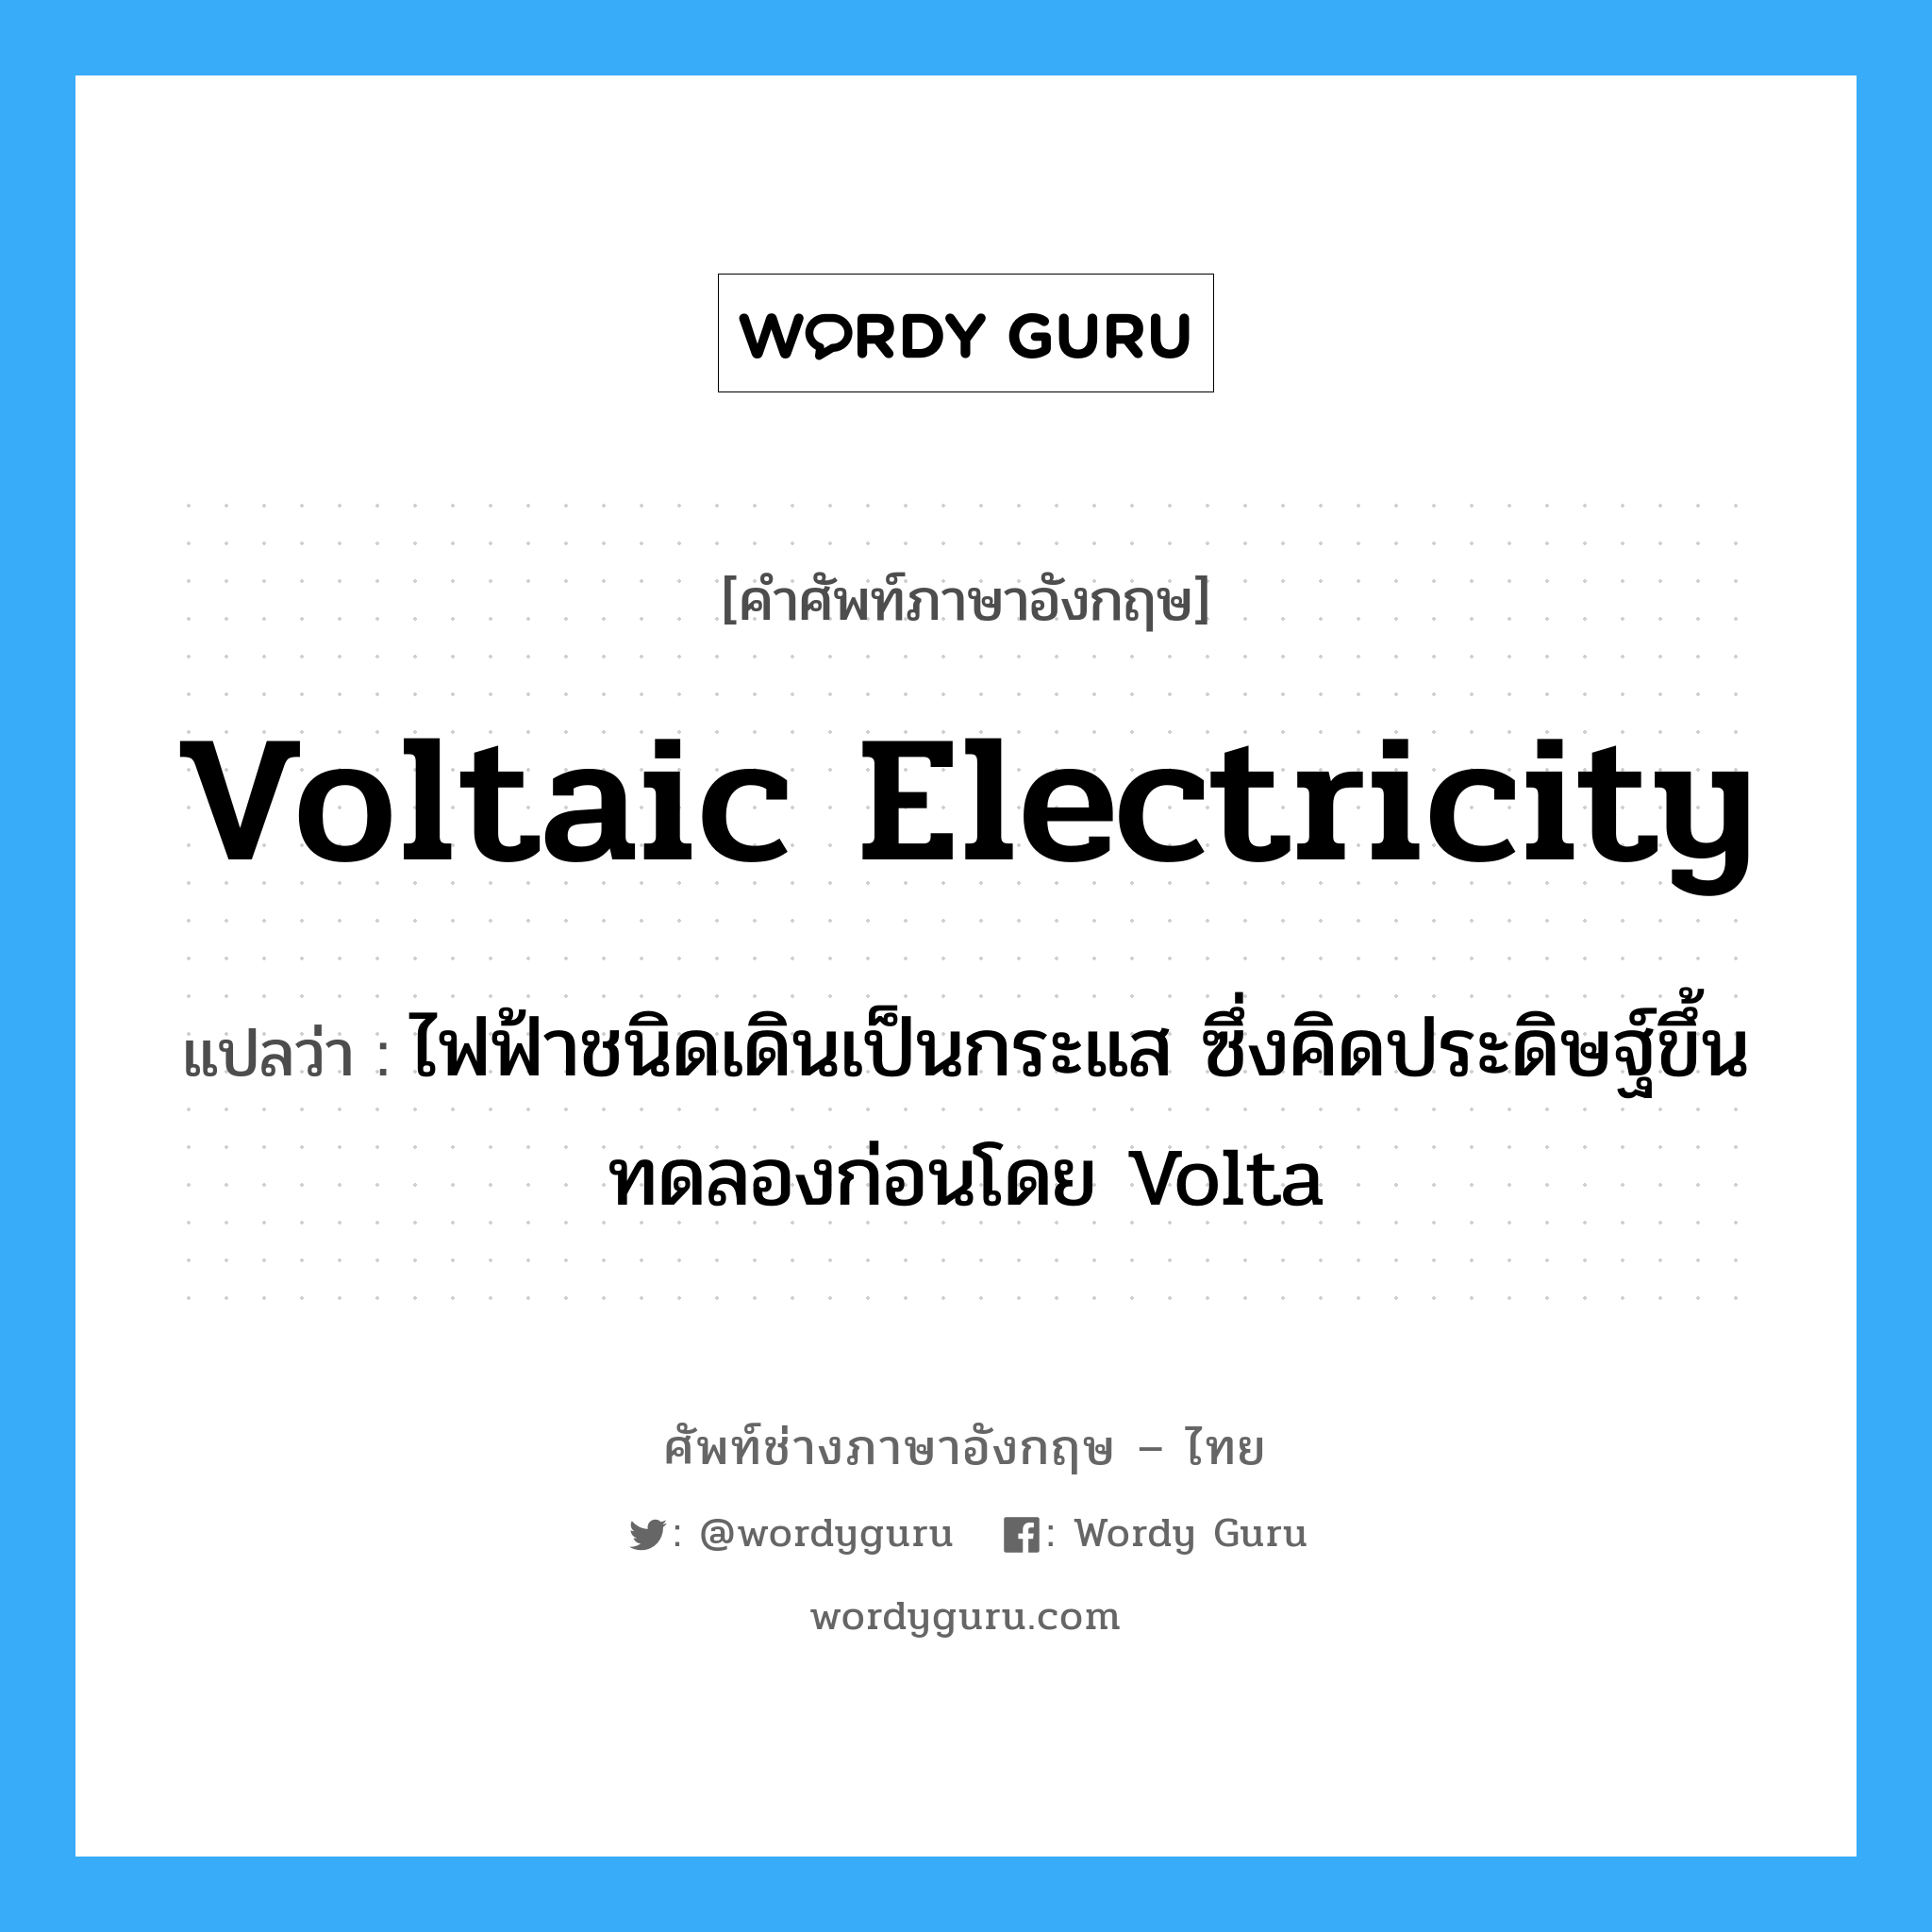 voltaic electricity แปลว่า?, คำศัพท์ช่างภาษาอังกฤษ - ไทย voltaic electricity คำศัพท์ภาษาอังกฤษ voltaic electricity แปลว่า ไฟฟ้าชนิดเดินเป็นกระแส ซึ่งคิดประดิษฐ์ขึ้นทดลองก่อนโดย Volta